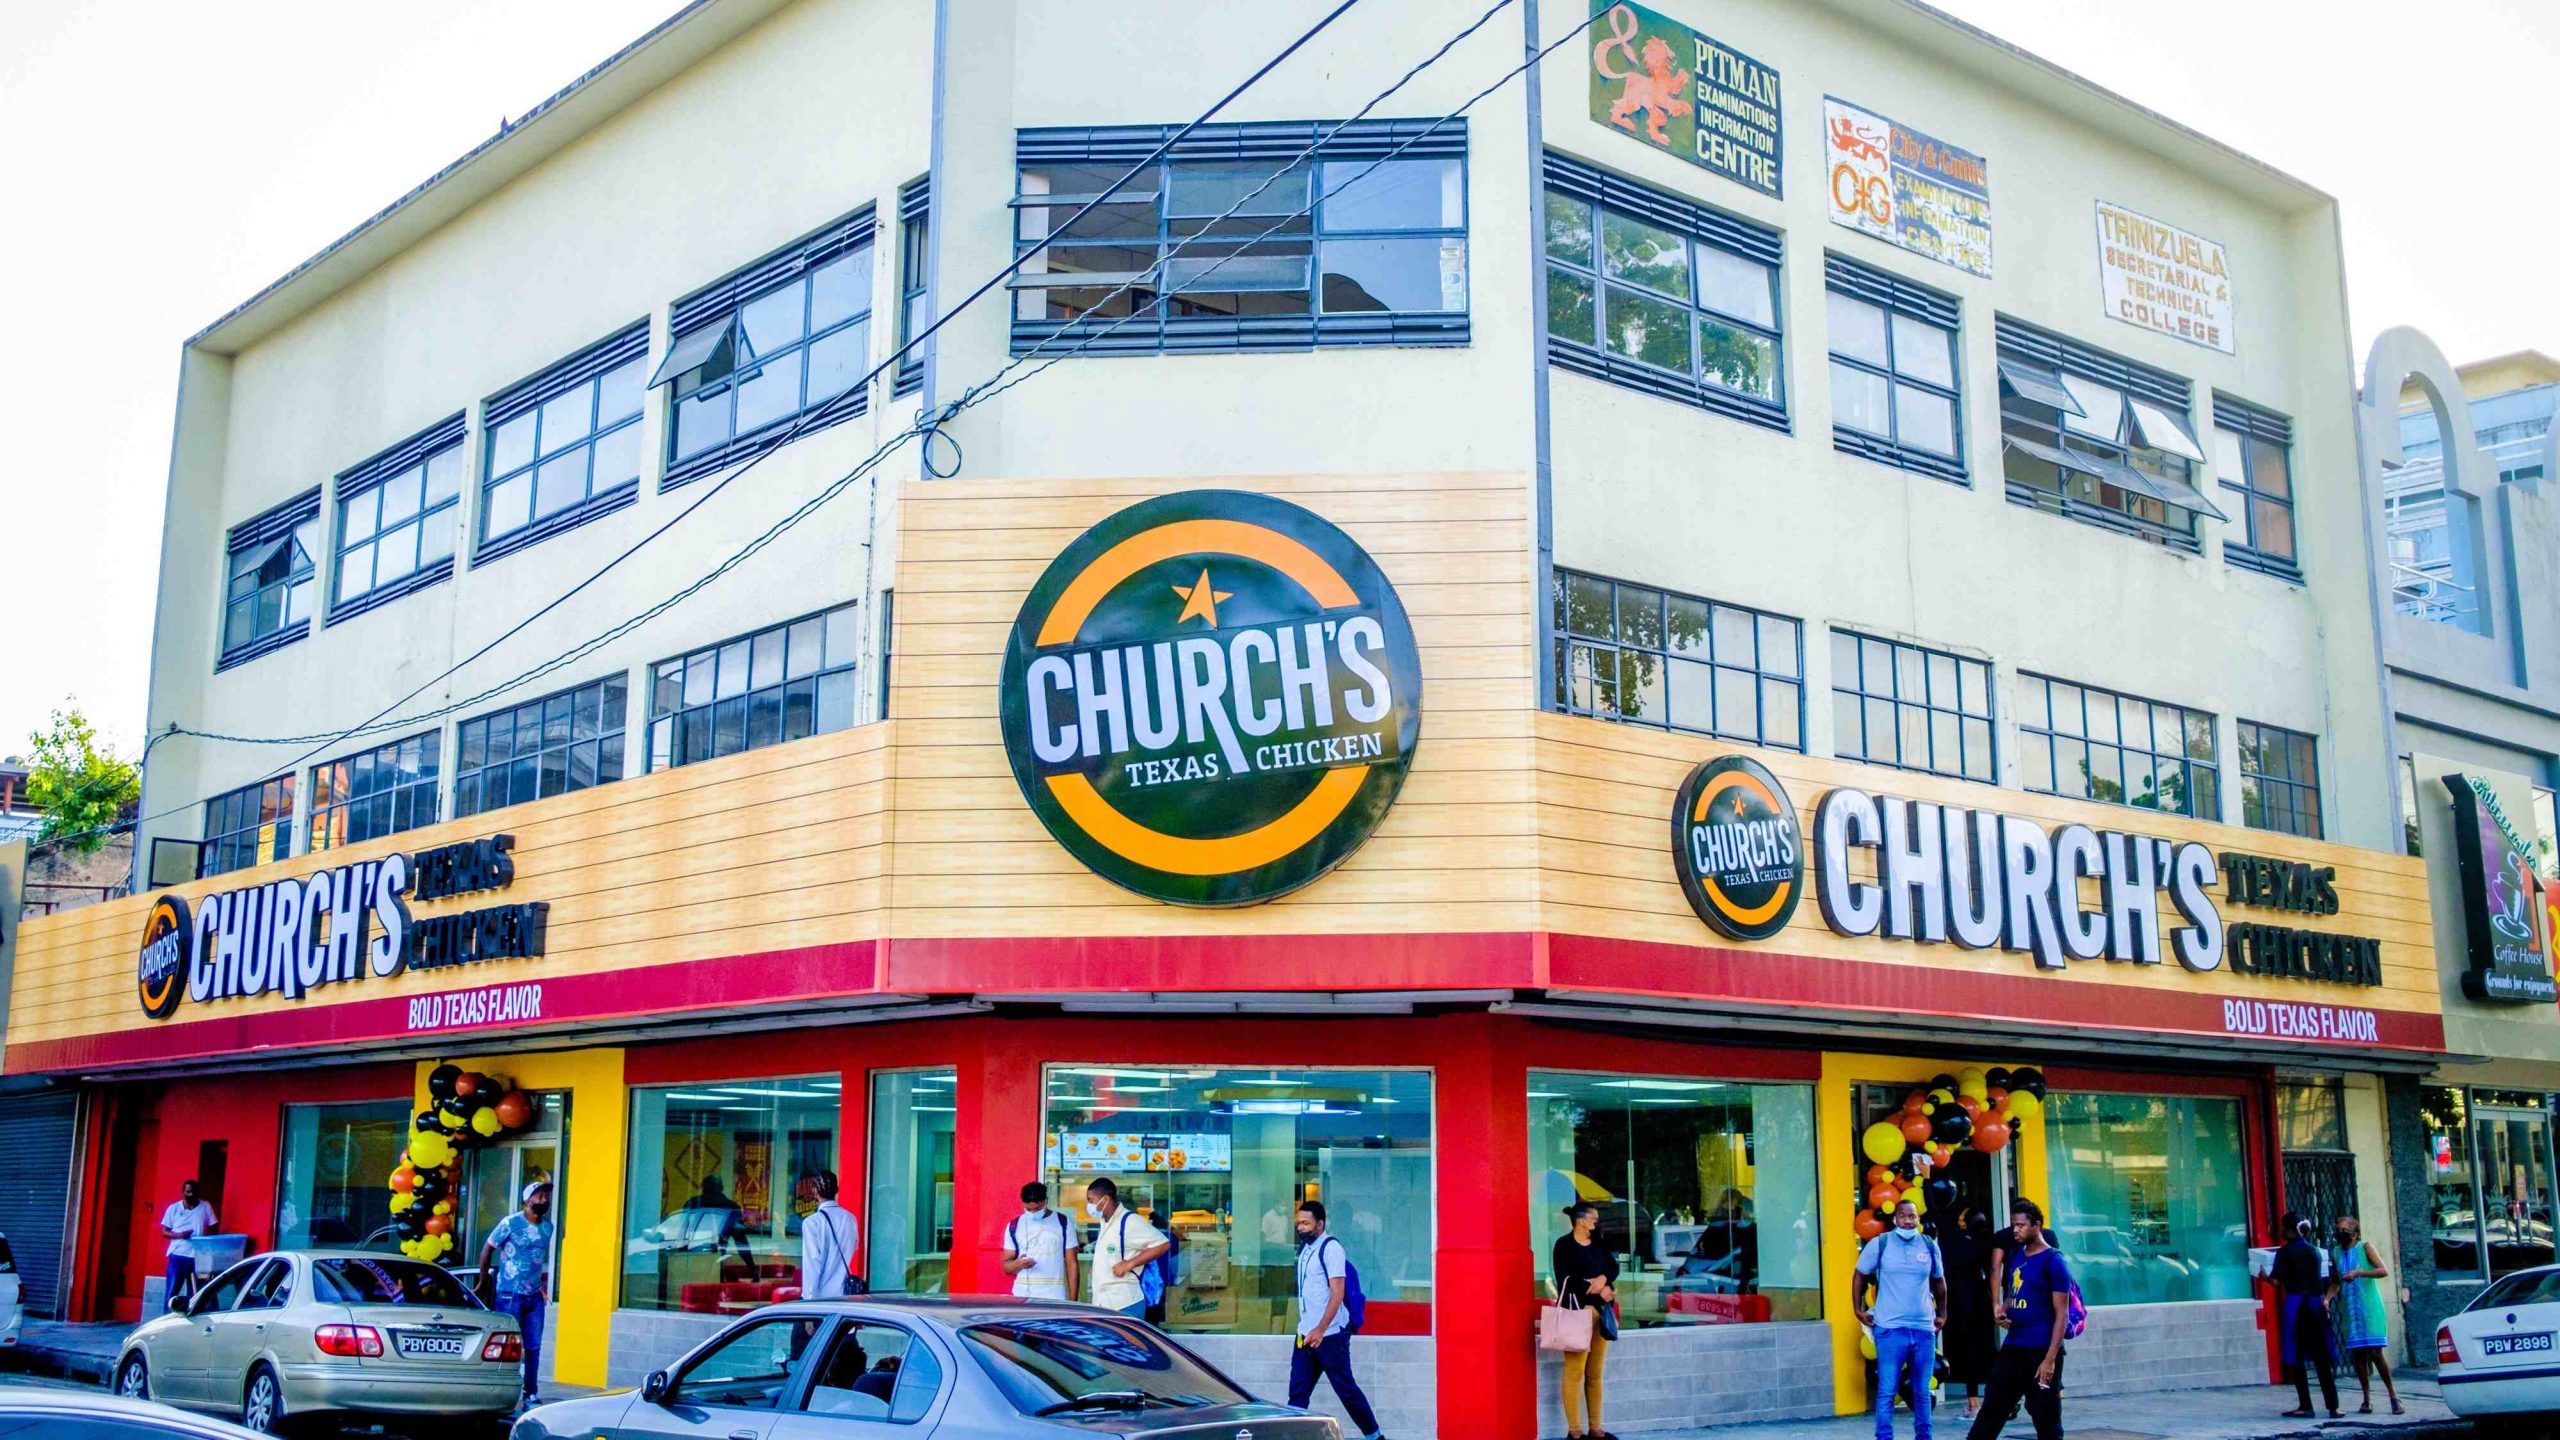 Bandits rob downtown POS branch of Church’s Chicken